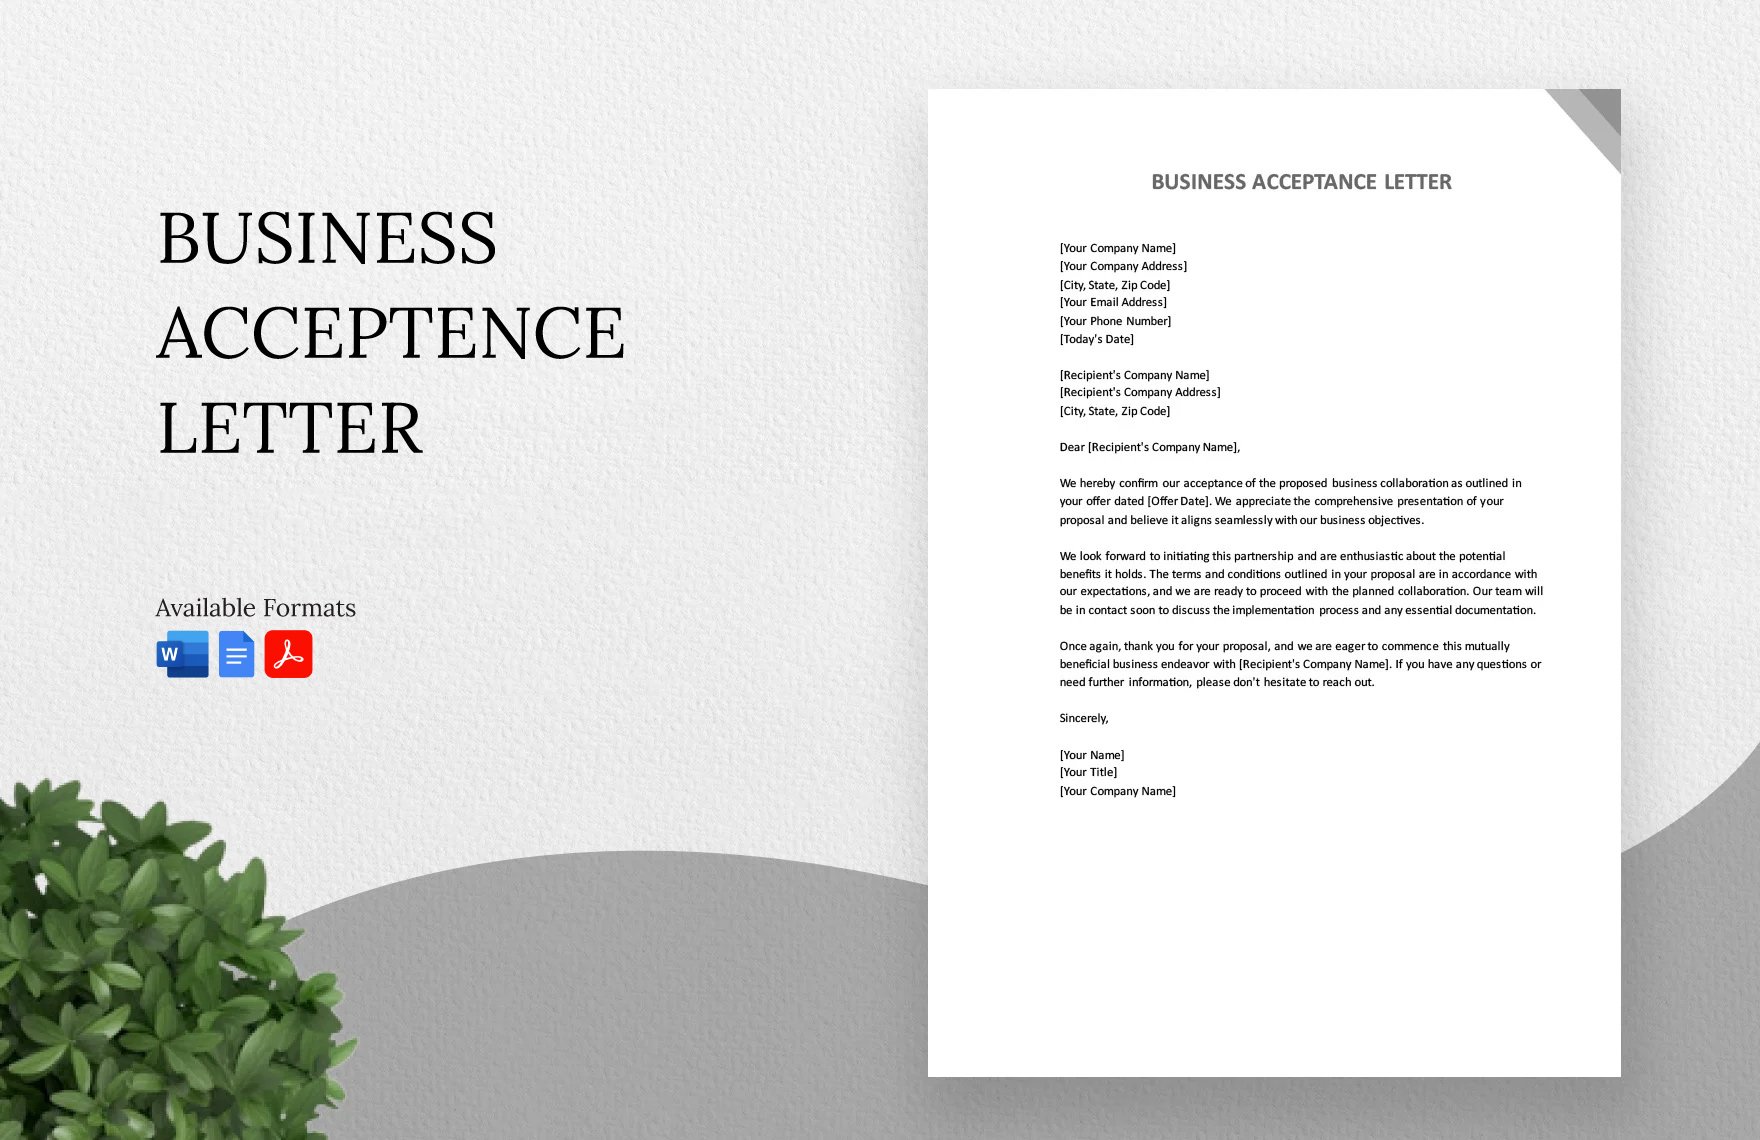 Business Acceptance Letter in Word, Google Docs, PDF